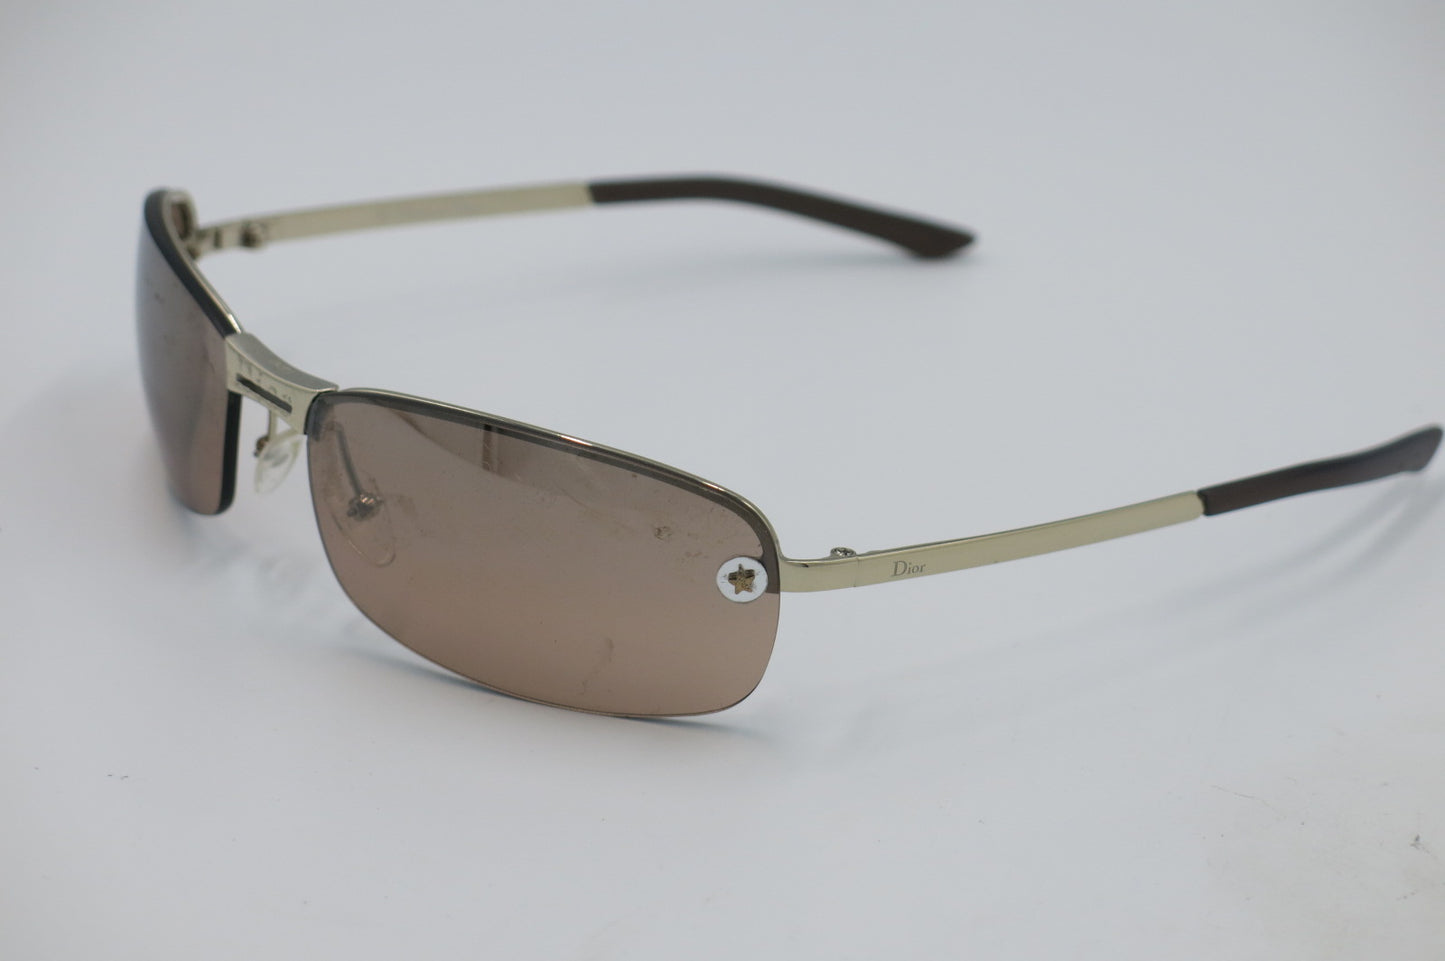 Dior Sunglasses - adiorable